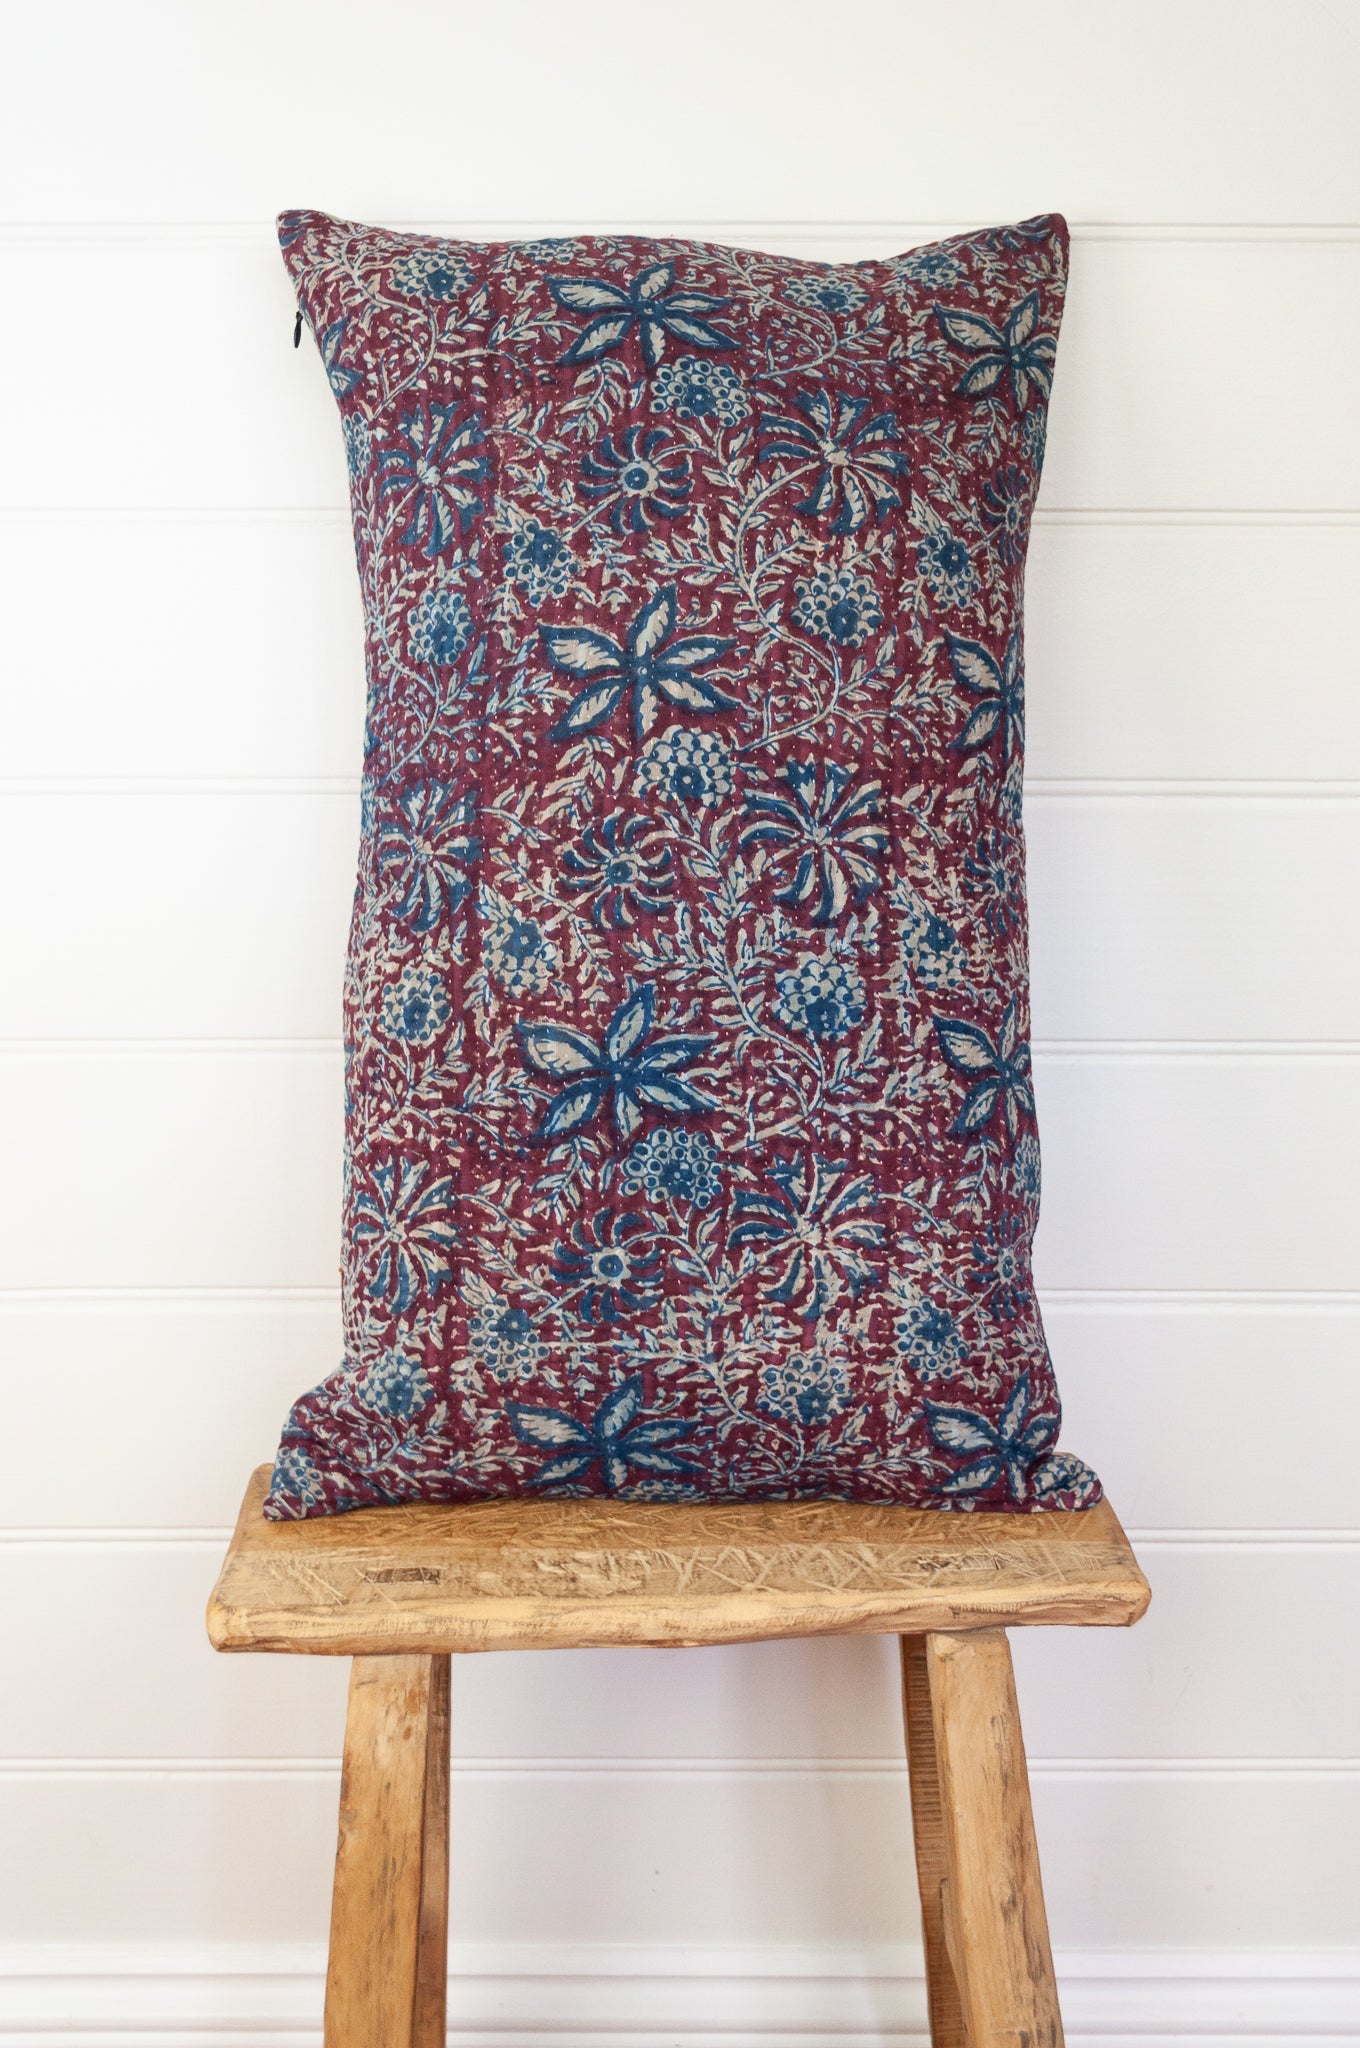 Vintage kantha oblong rectangular bolster cushion blockprinted with floral design in indigo and deep burgundy red.